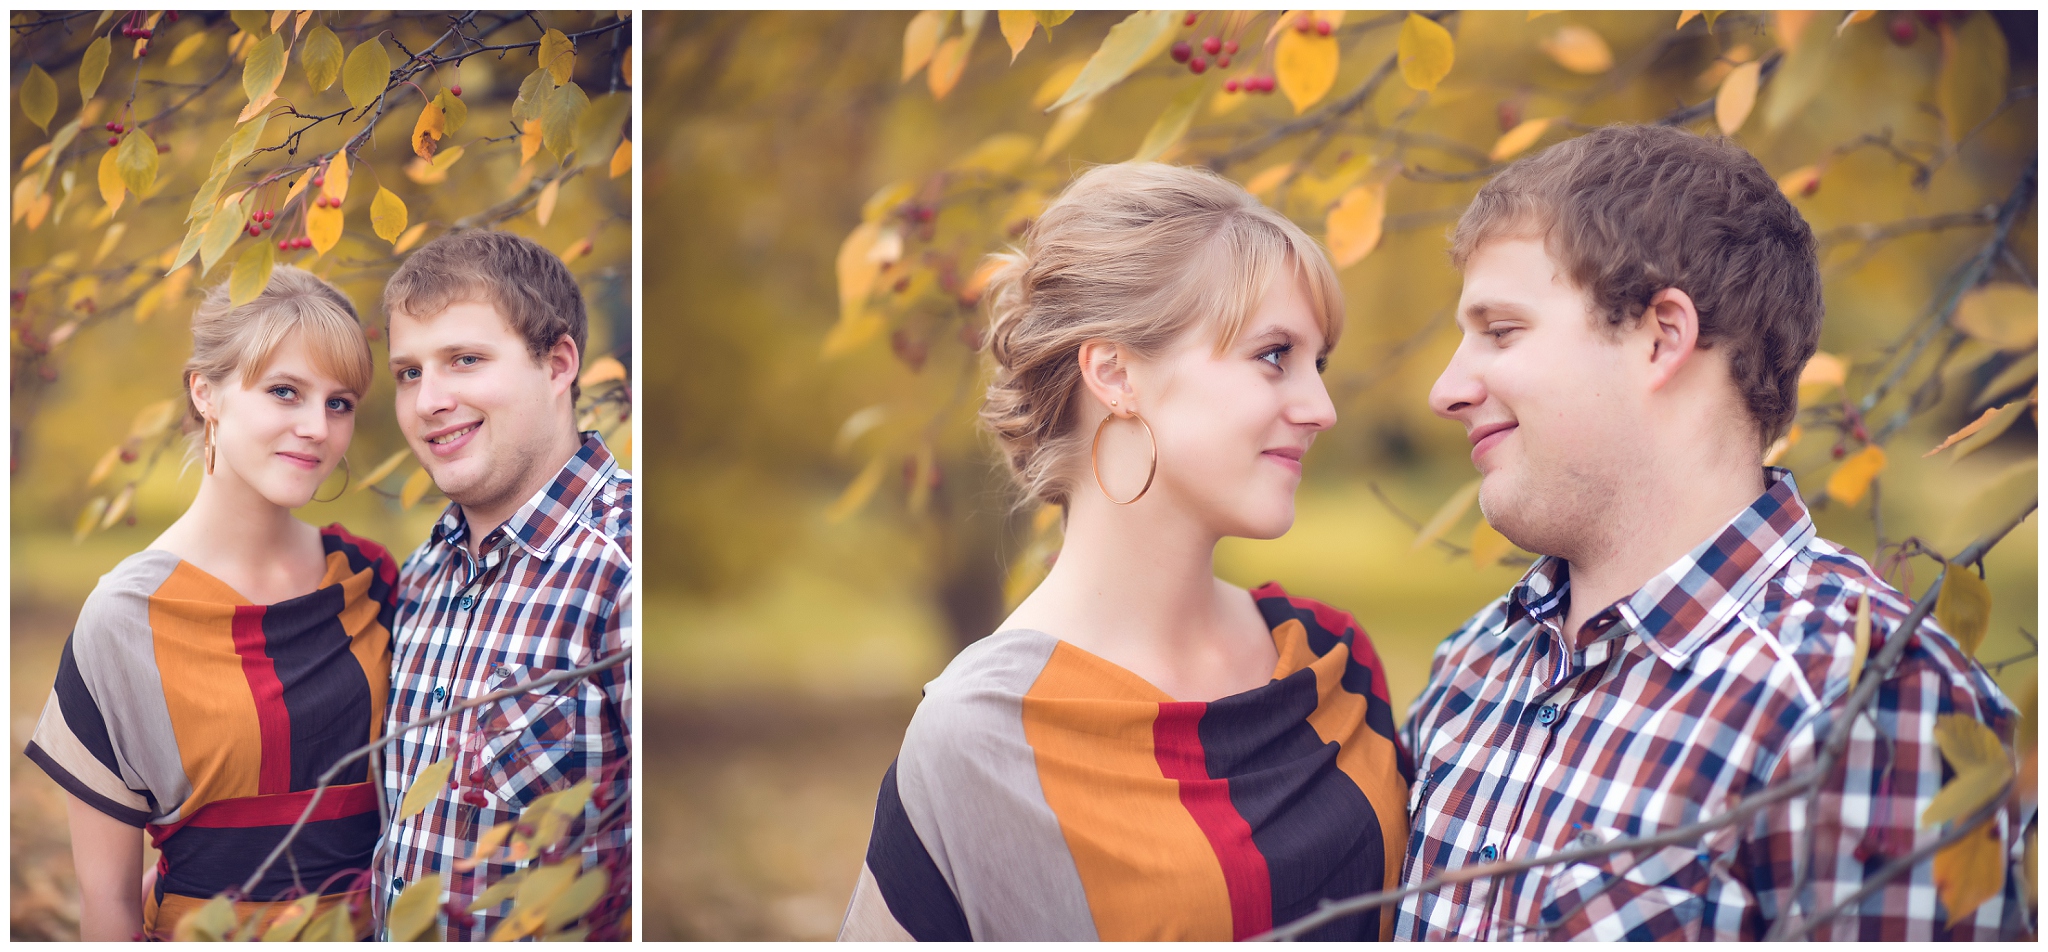 Stacey & Steven | Ottawa Couples Photographer